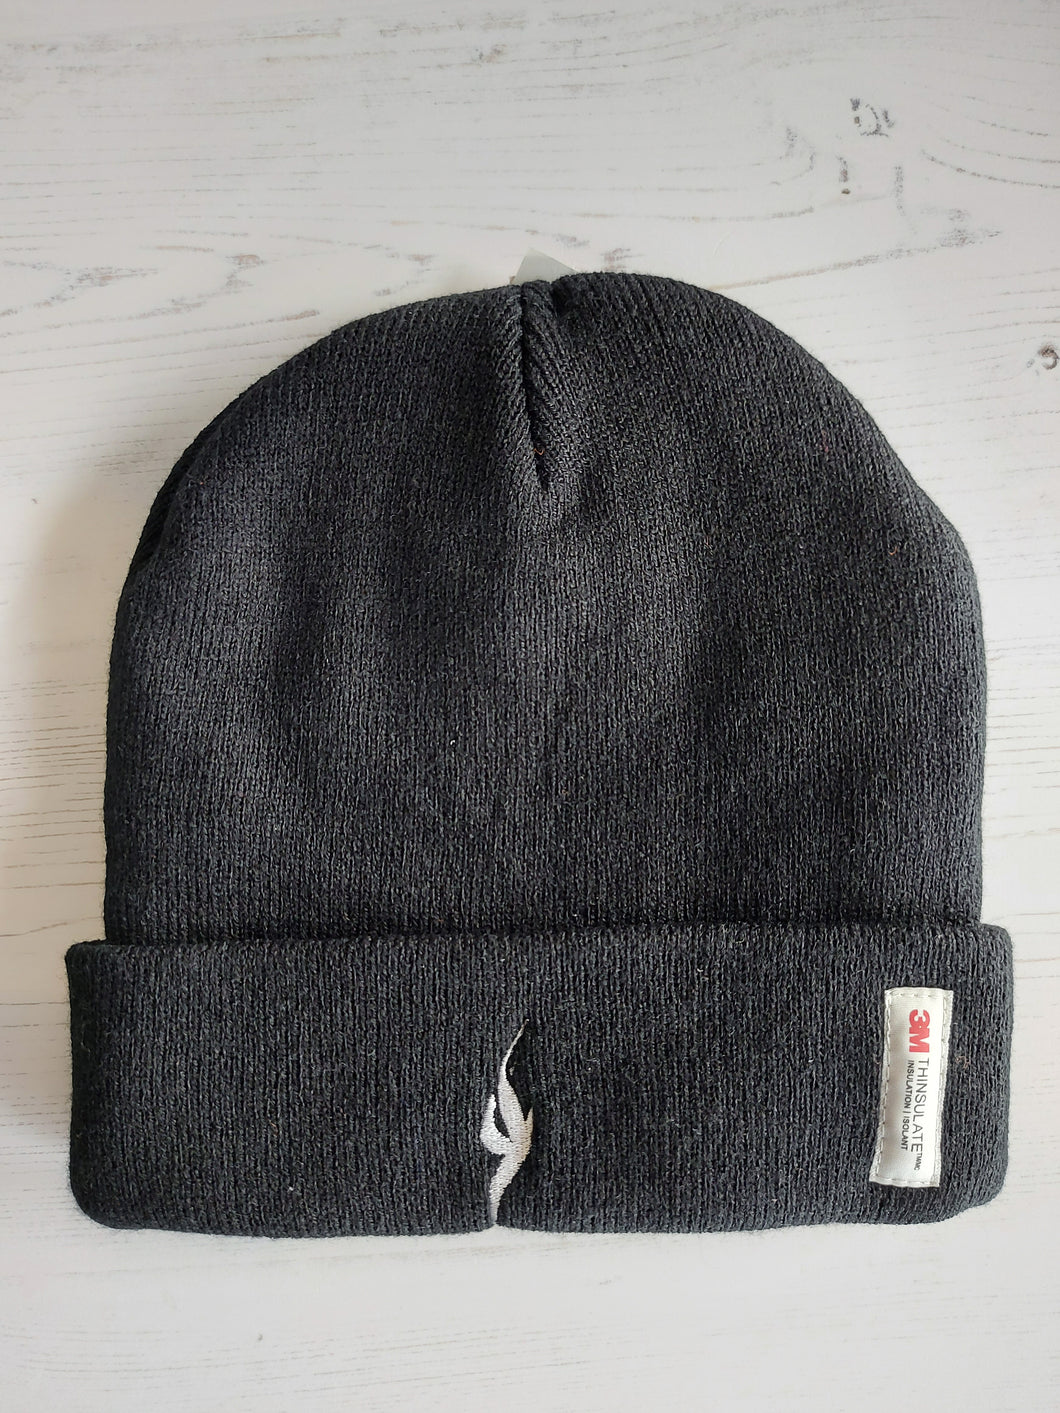 Black Tern Beanie Hat